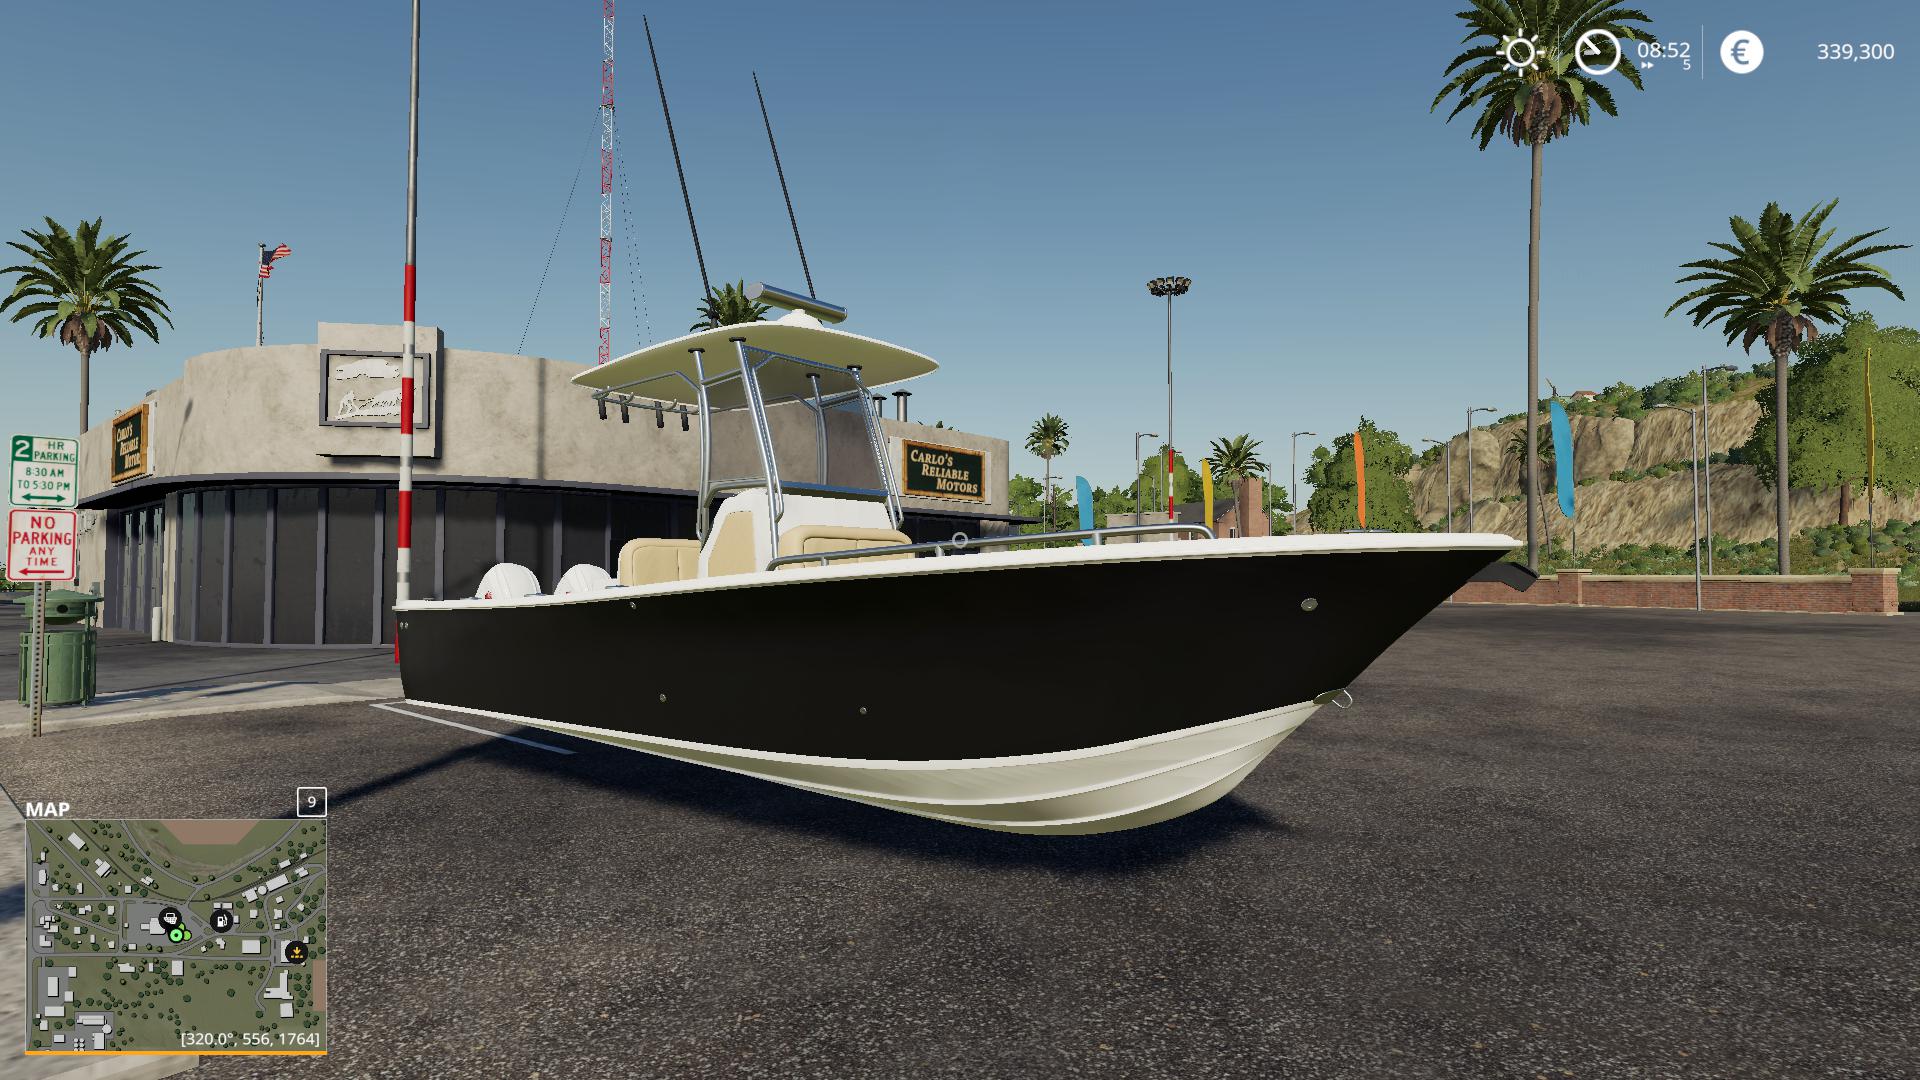 Лодка Everglade v1.0.6.9 FS19 Farming Simulator 22 мод FS 19 МОДЫ.